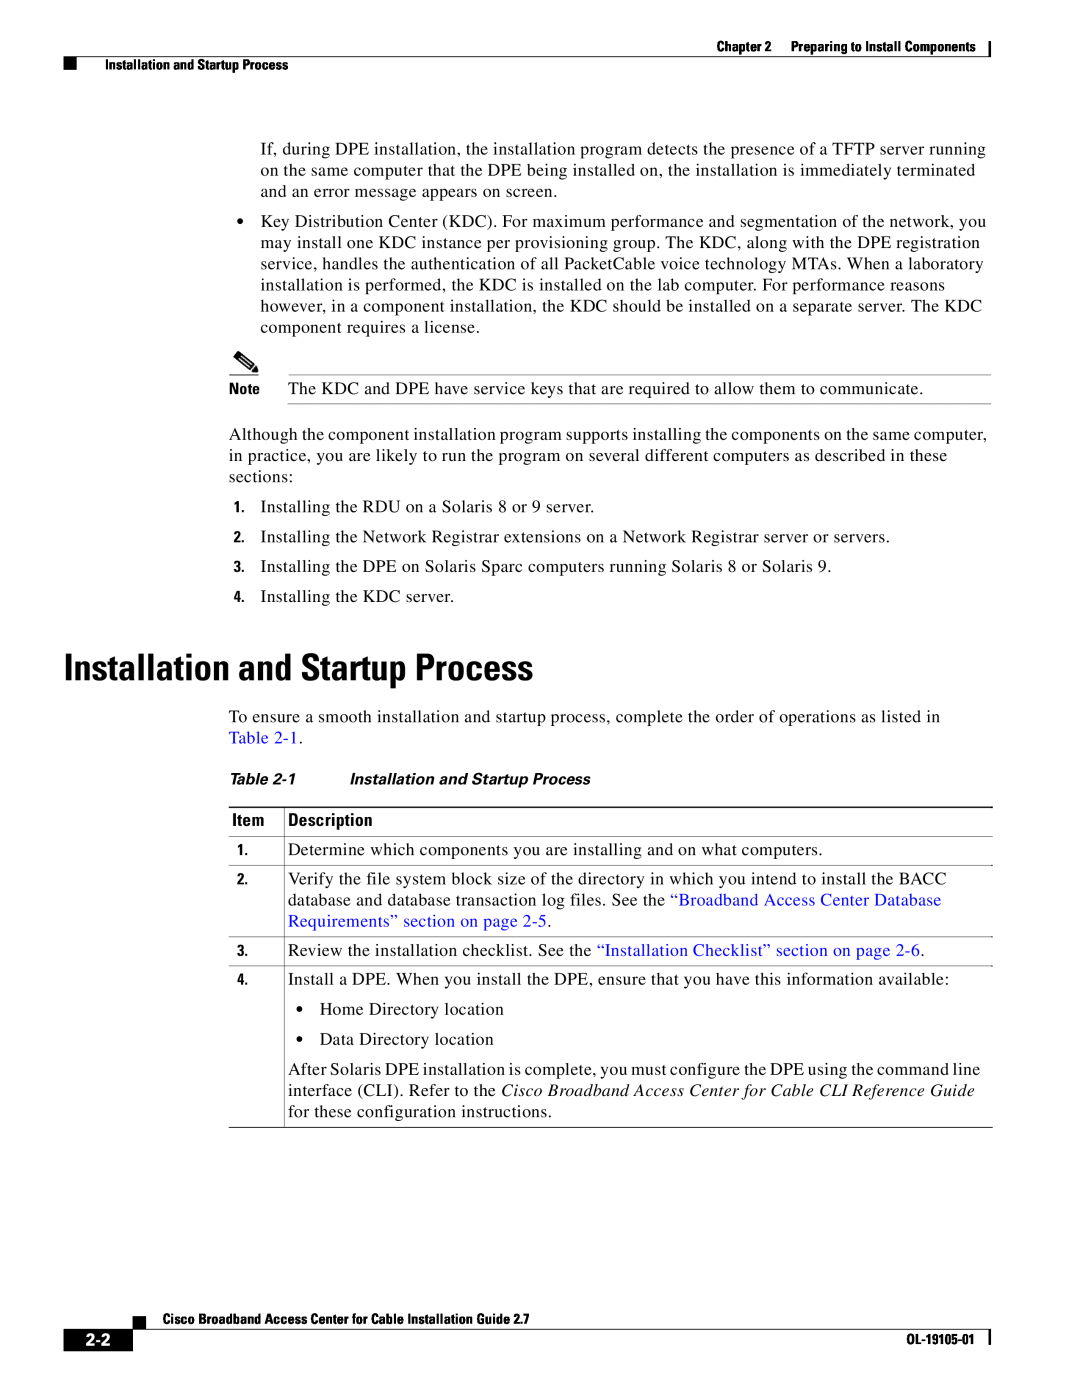 Cisco Systems Broadband Access Center manual Installation and Startup Process, Item Description 